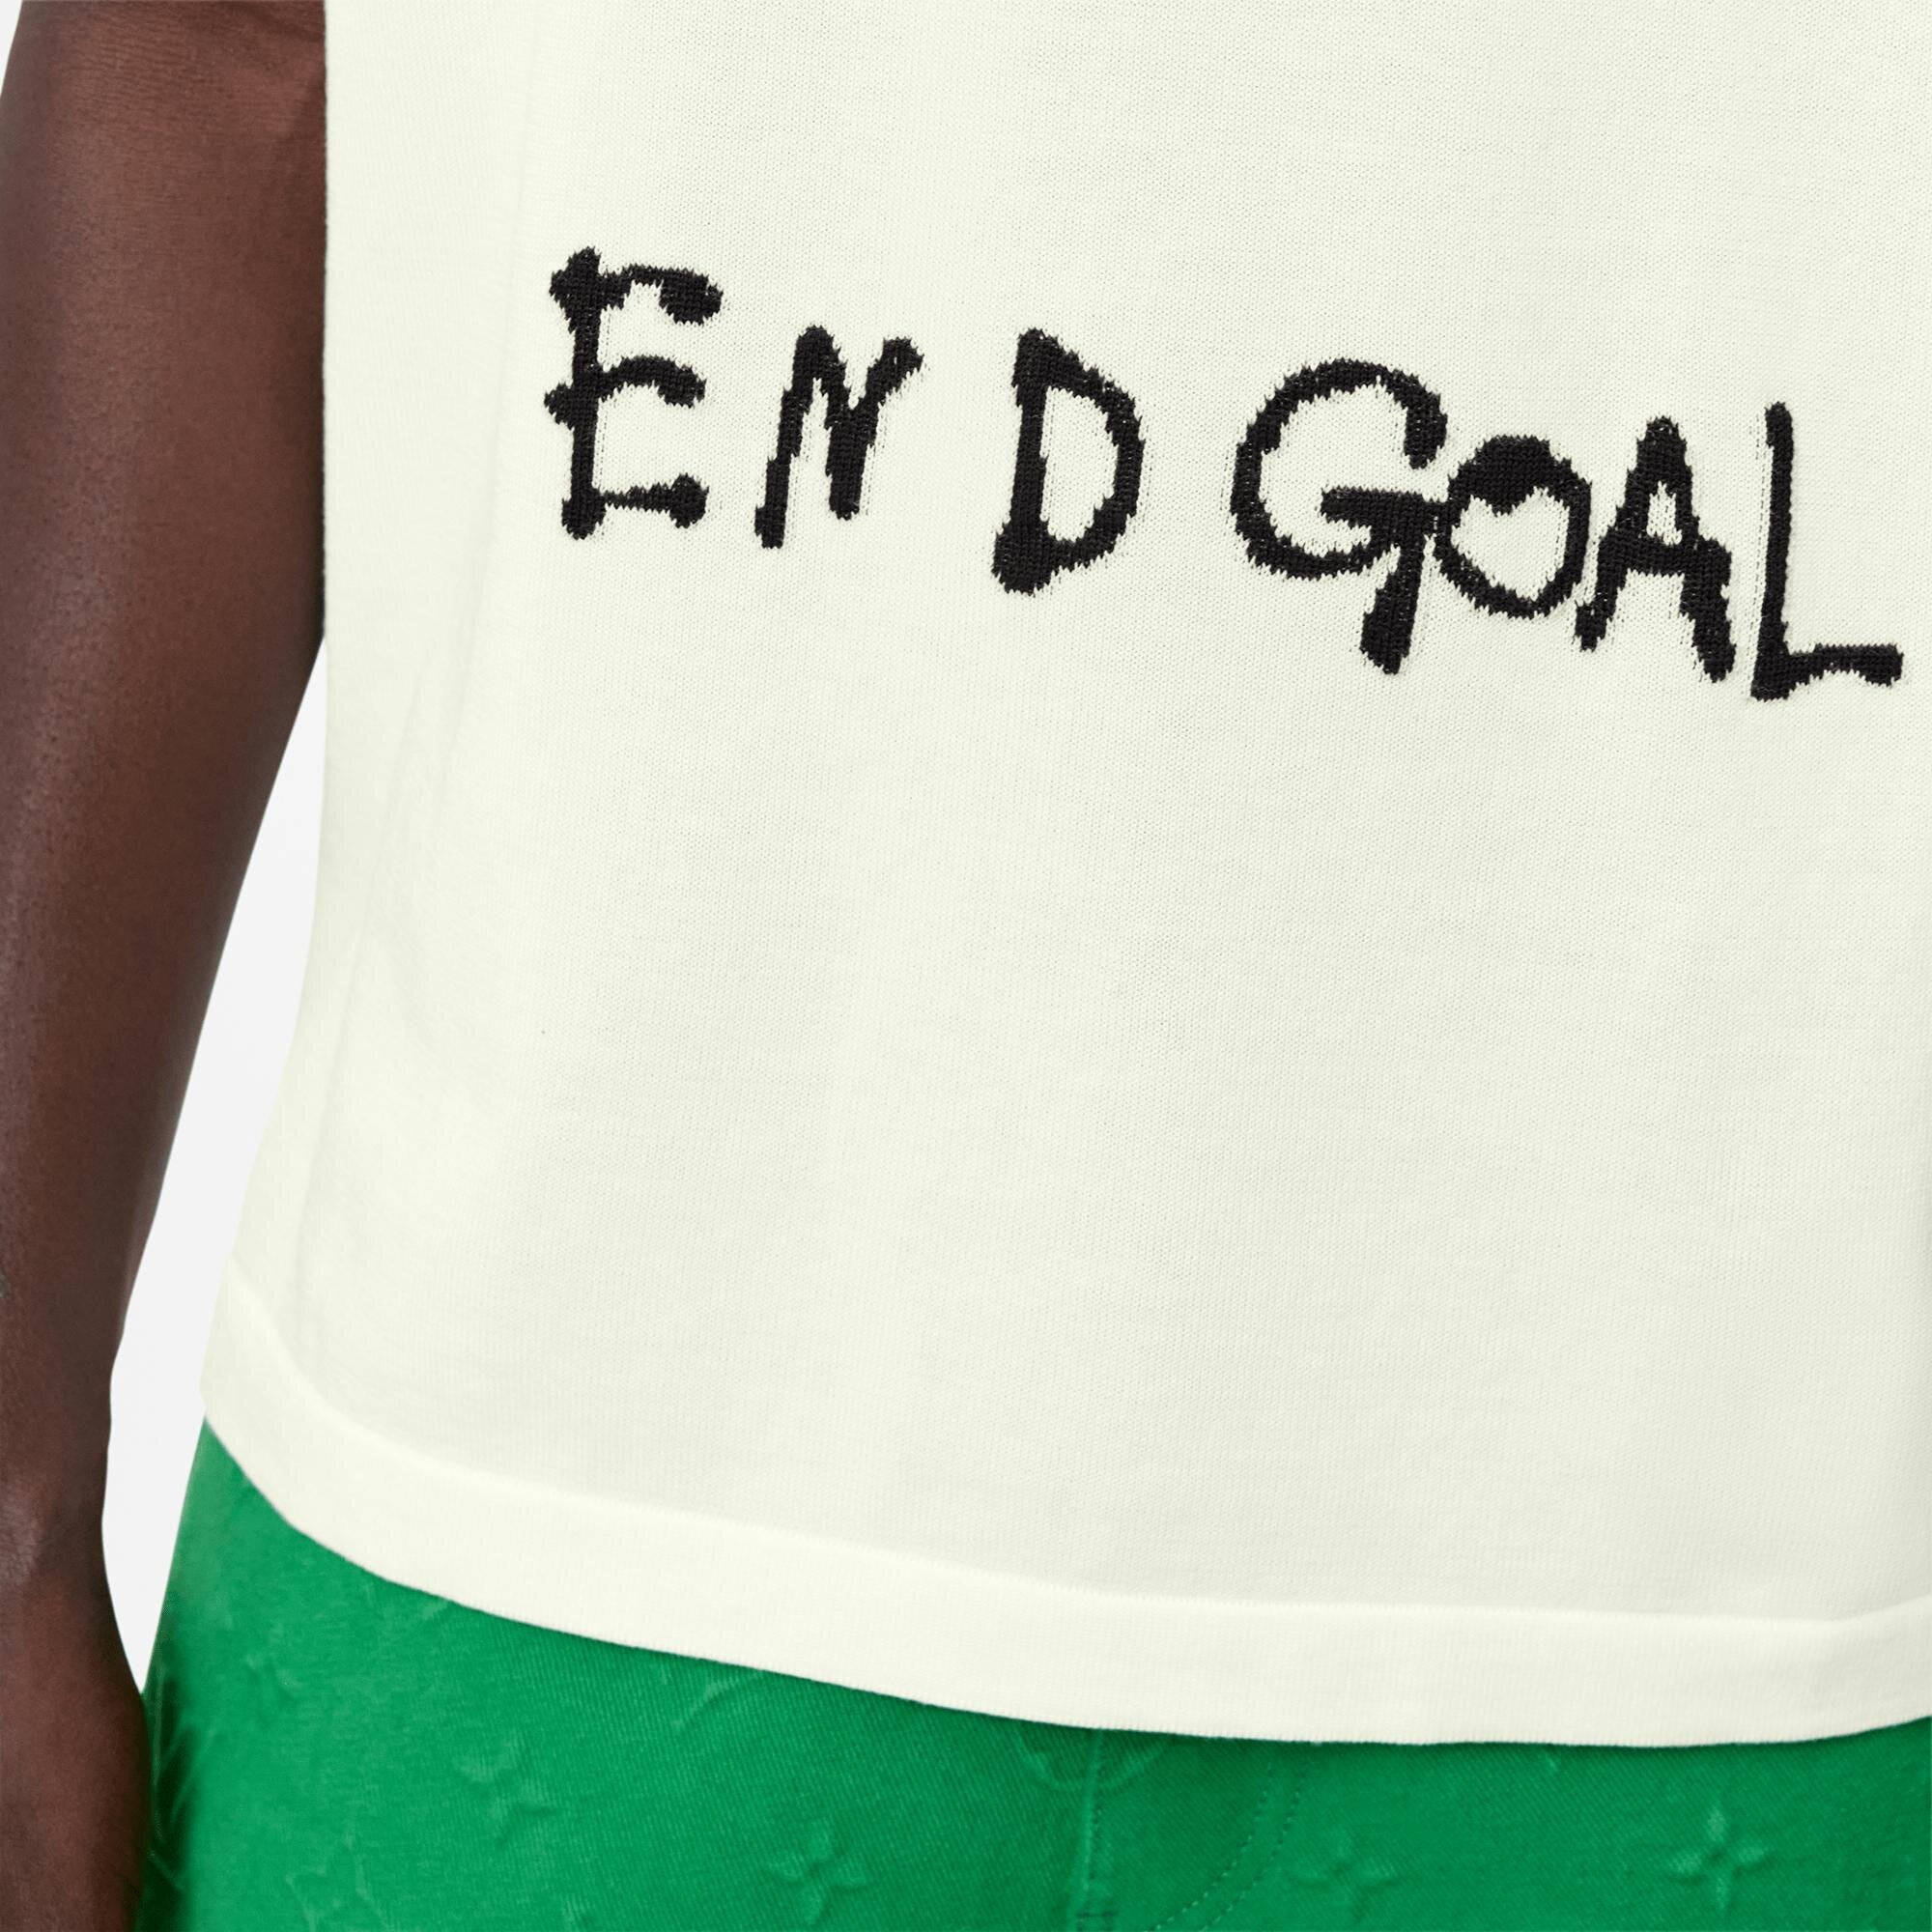 Louis Vuitton 2021 End Goal T-Shirt - White T-Shirts, Clothing - LOU754378